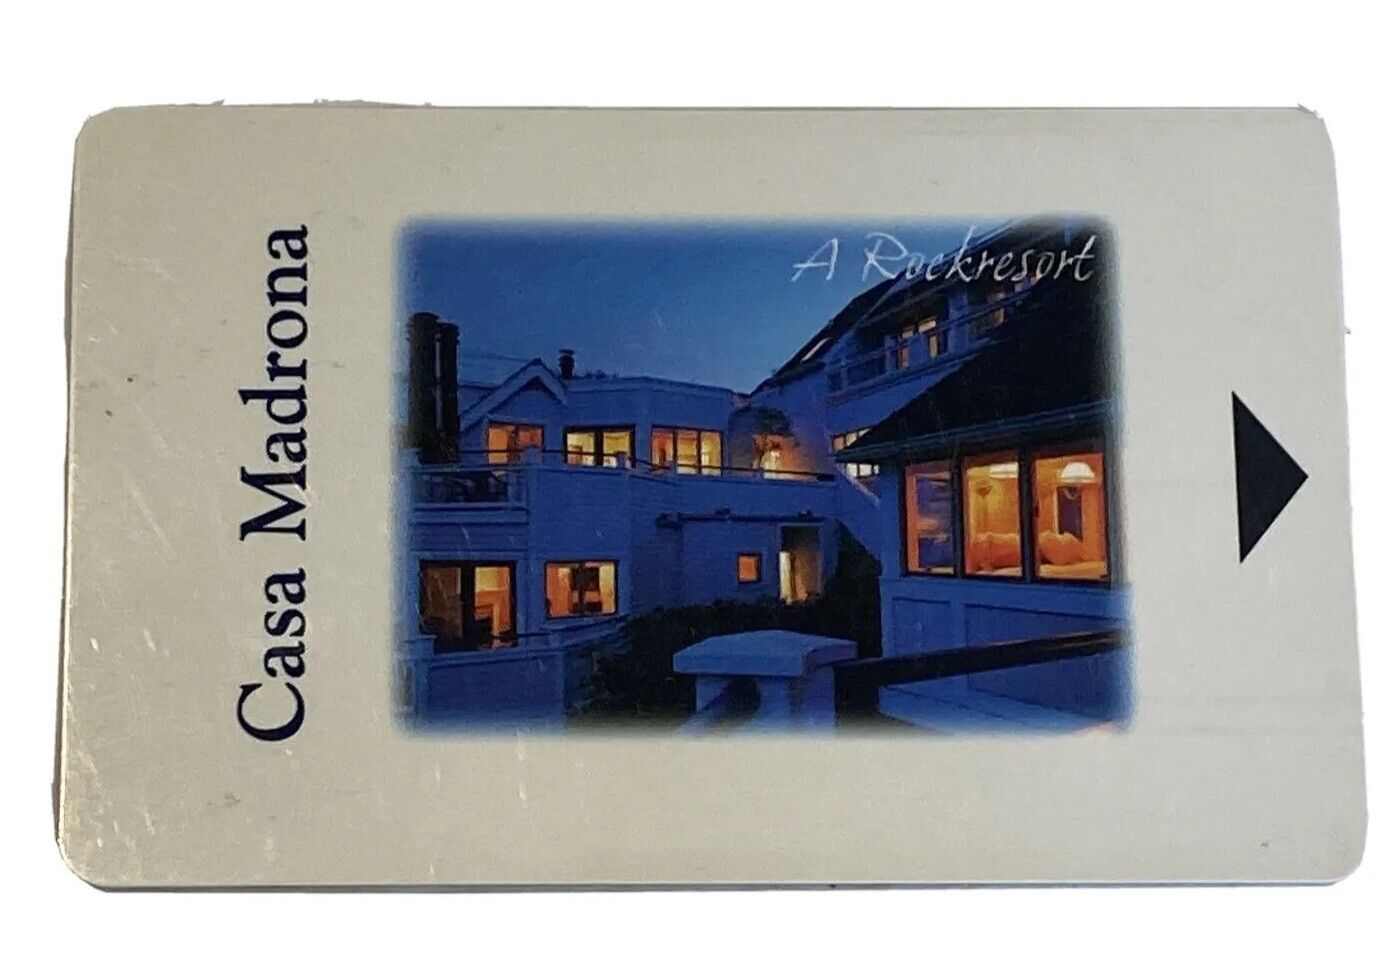 Vintage Casa Madrona A Rockresort Card Key